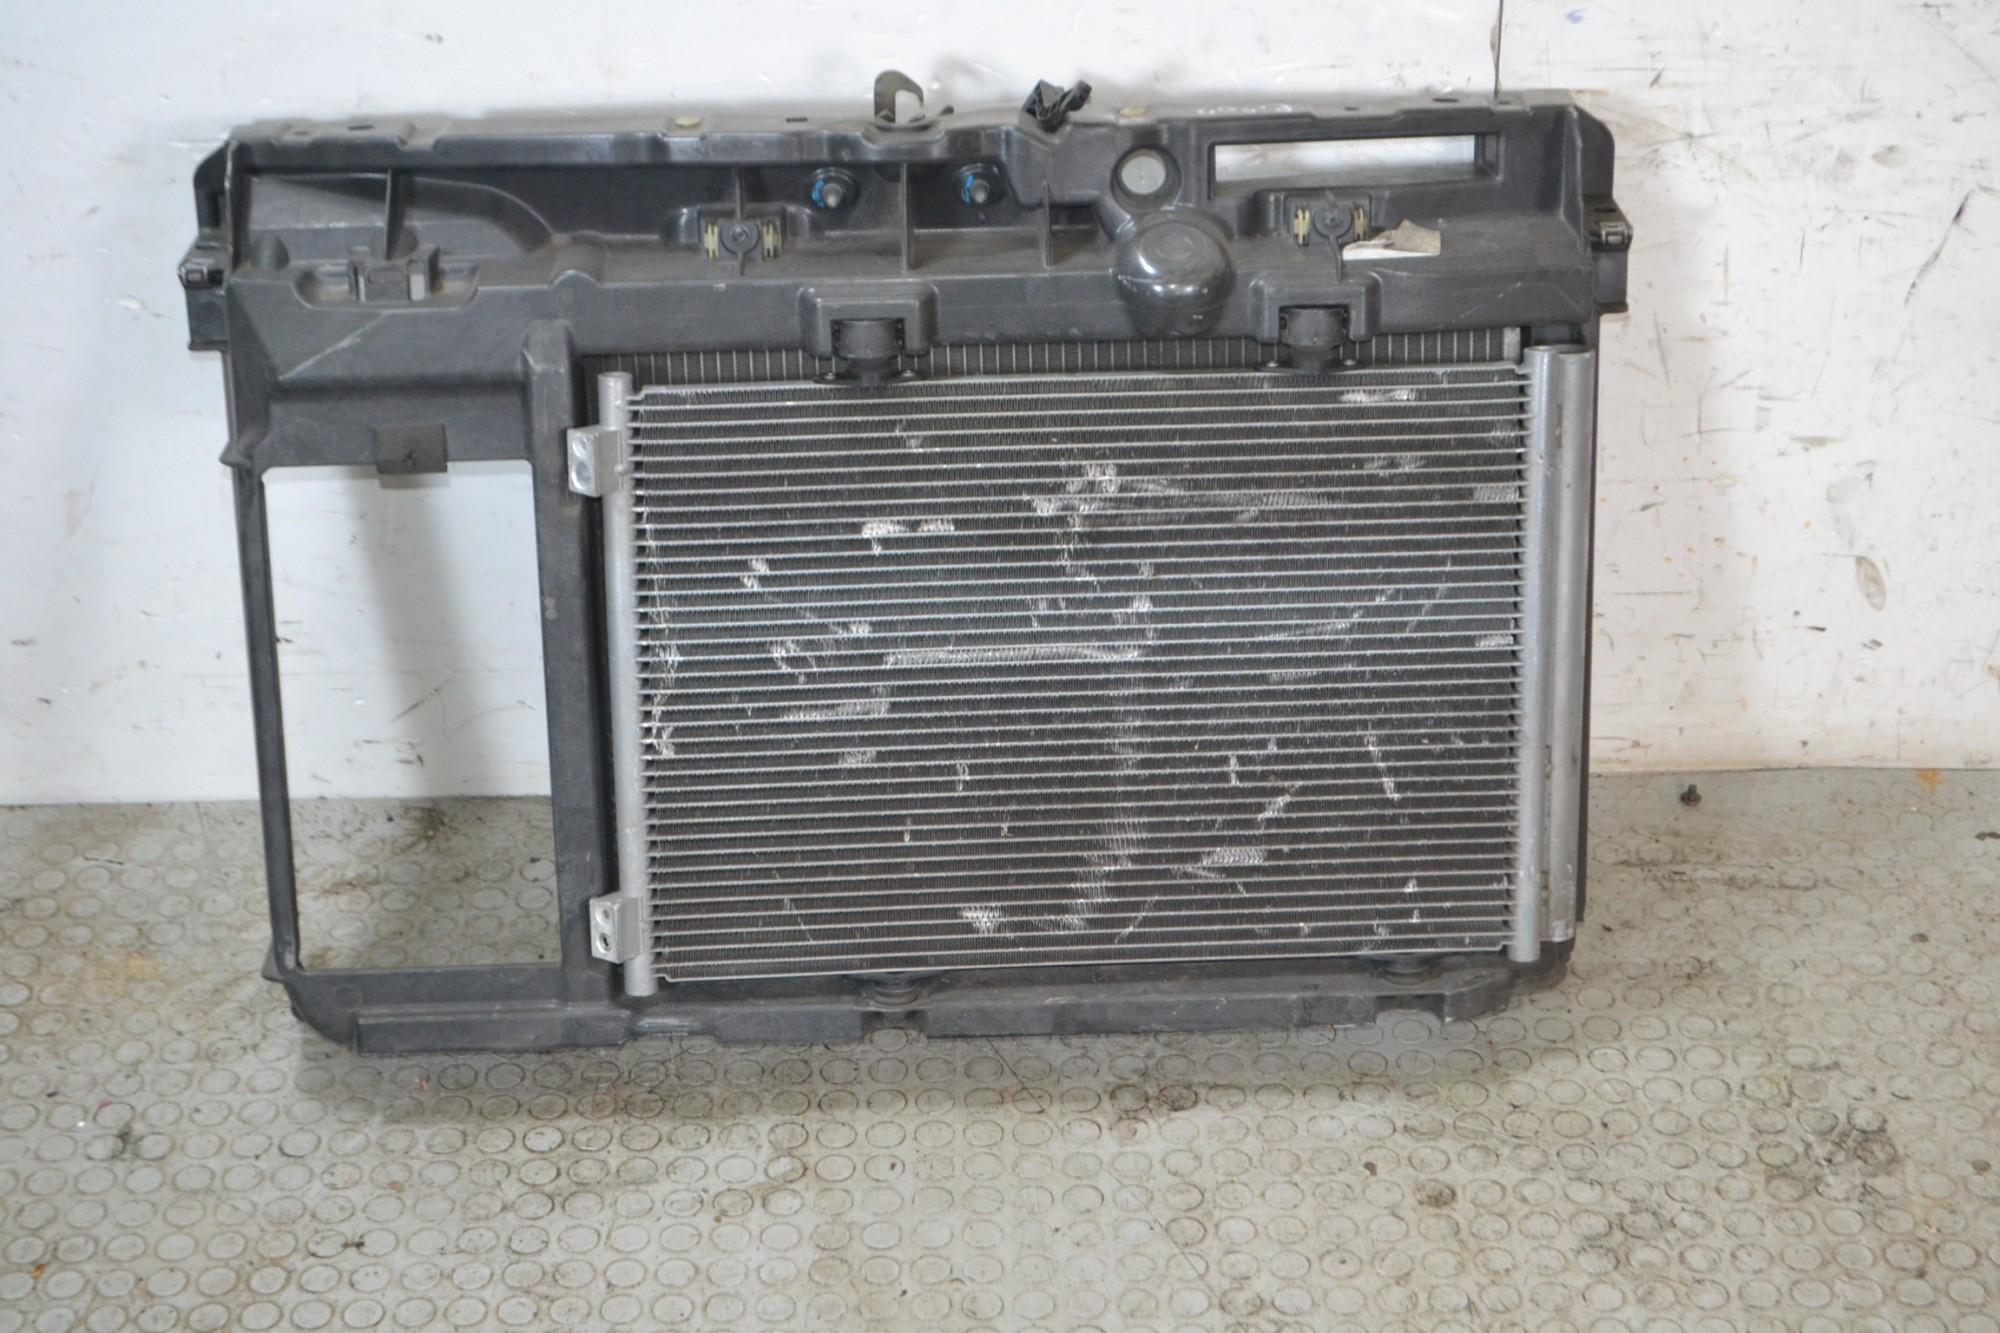 Ossatura calandra con radiatori Peugeot 207 Dal 2006 al 2015  1685006673046